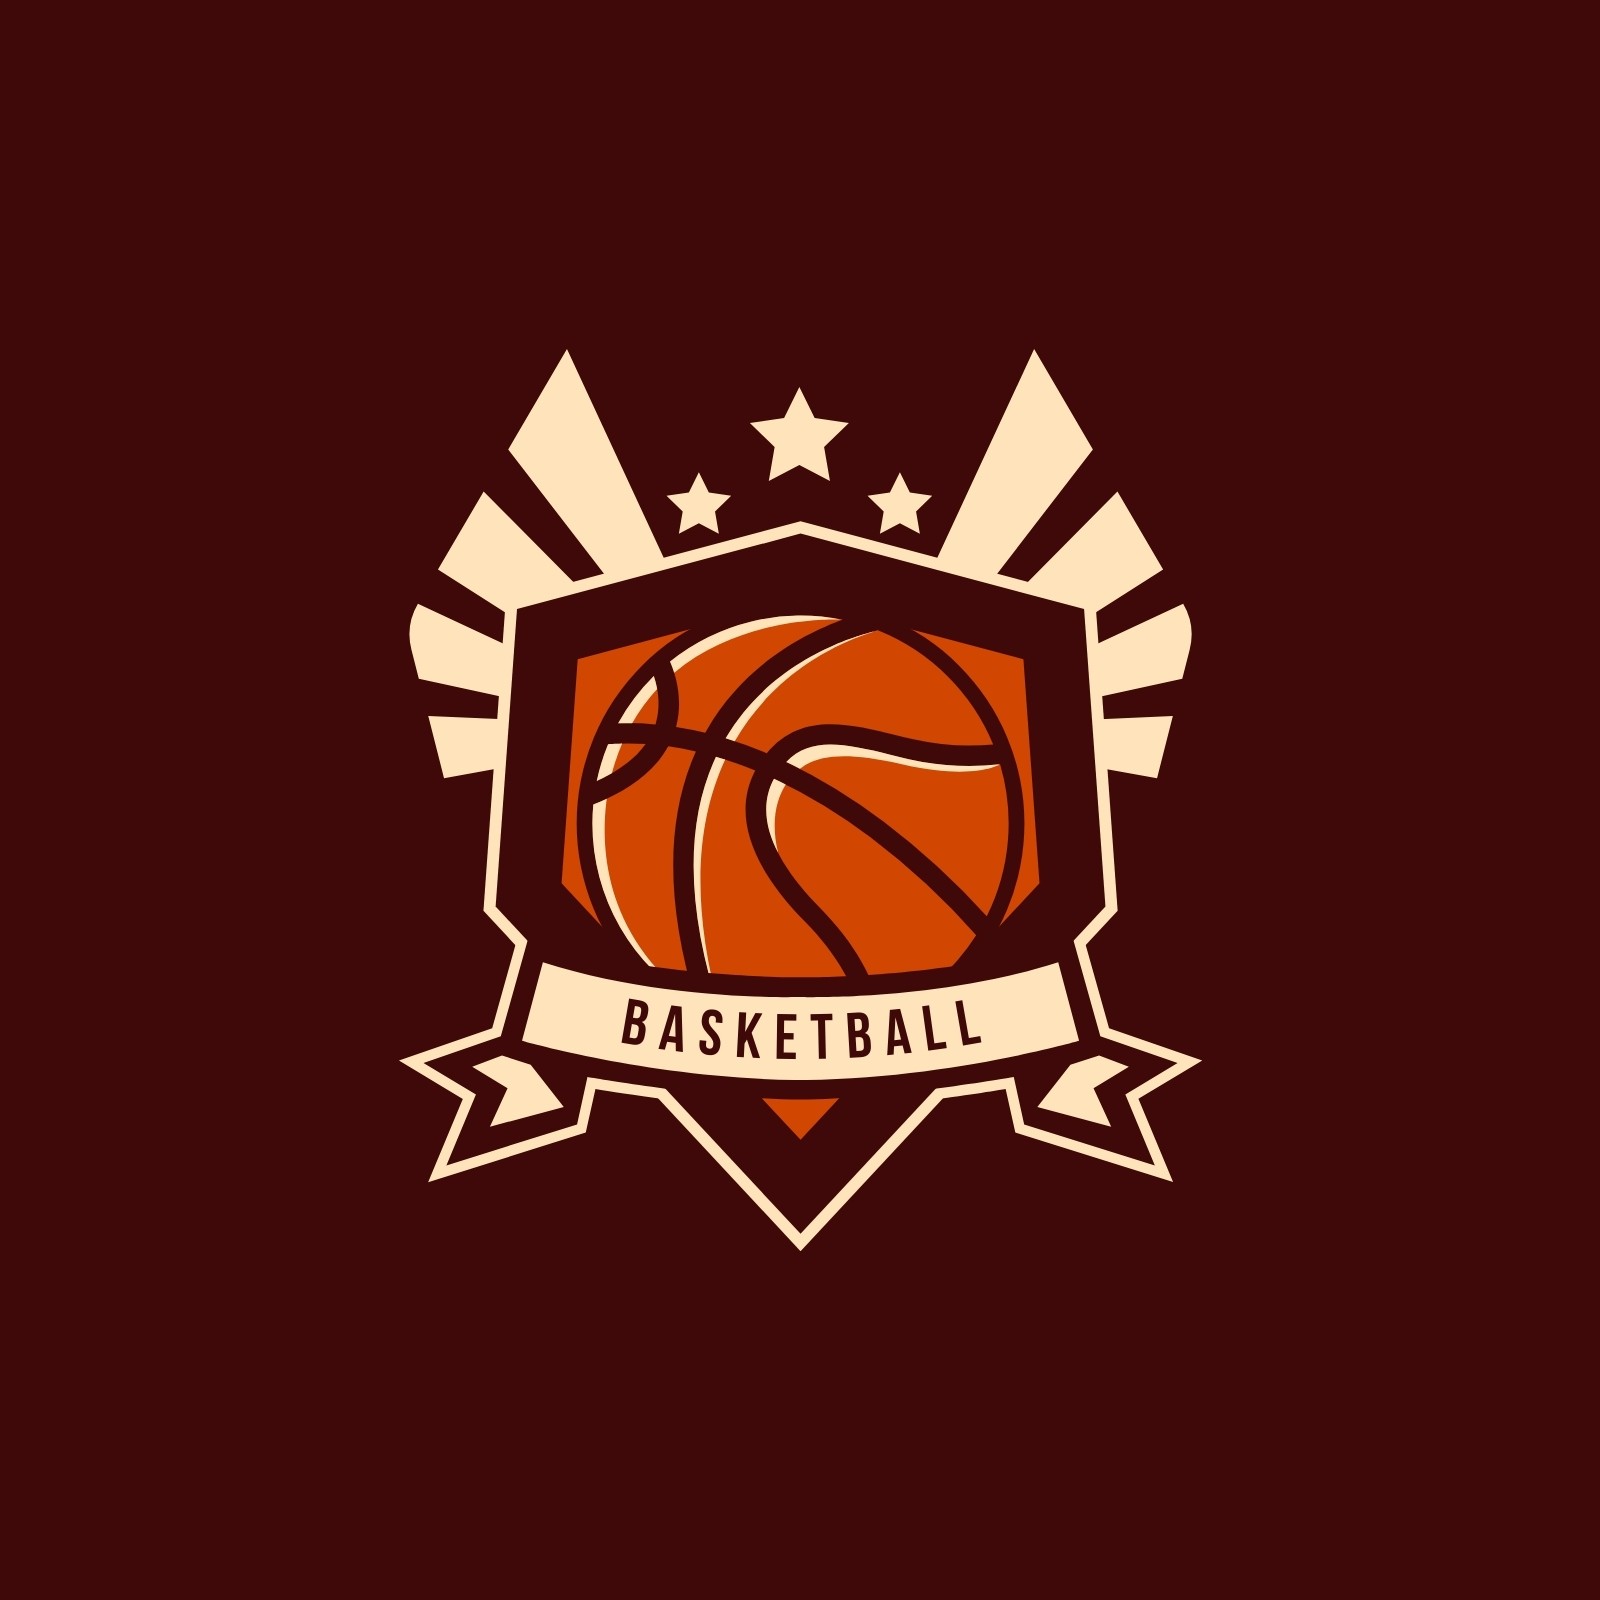 Free printable, customizable basketball logo templates Canva